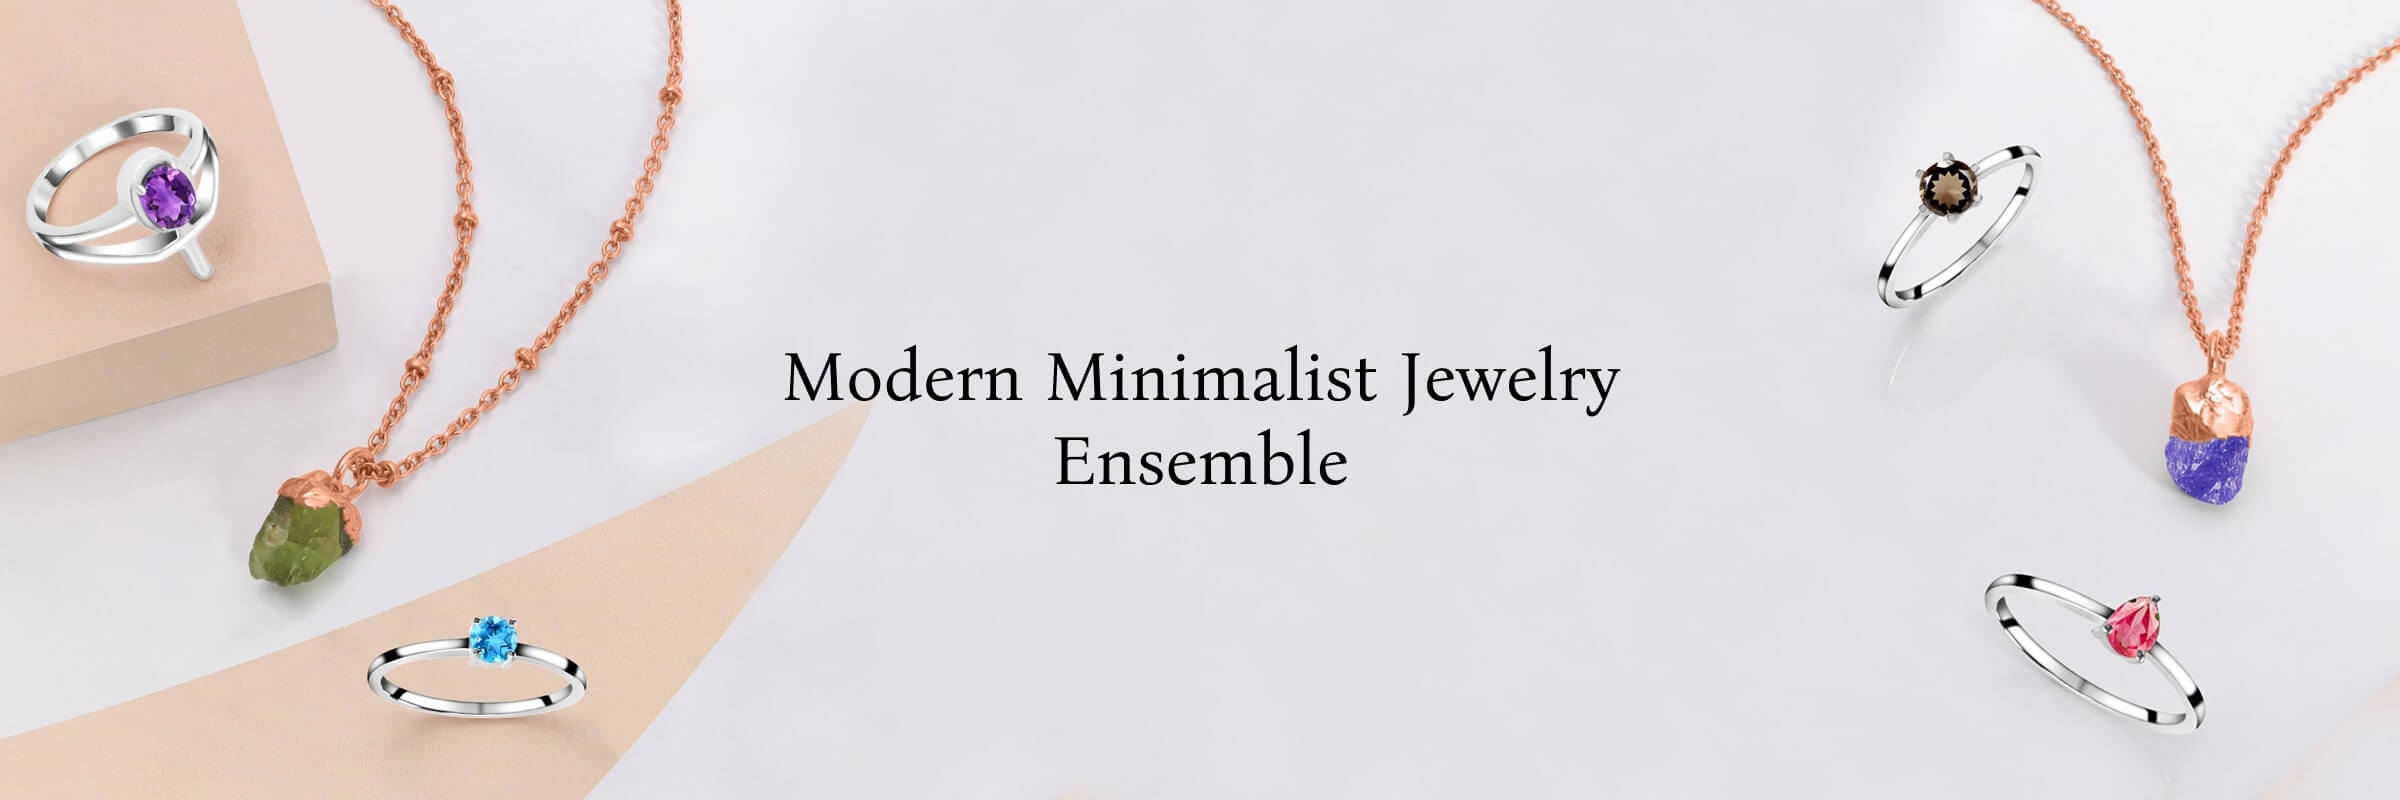 Sterling Silver Minimalist Jewelry